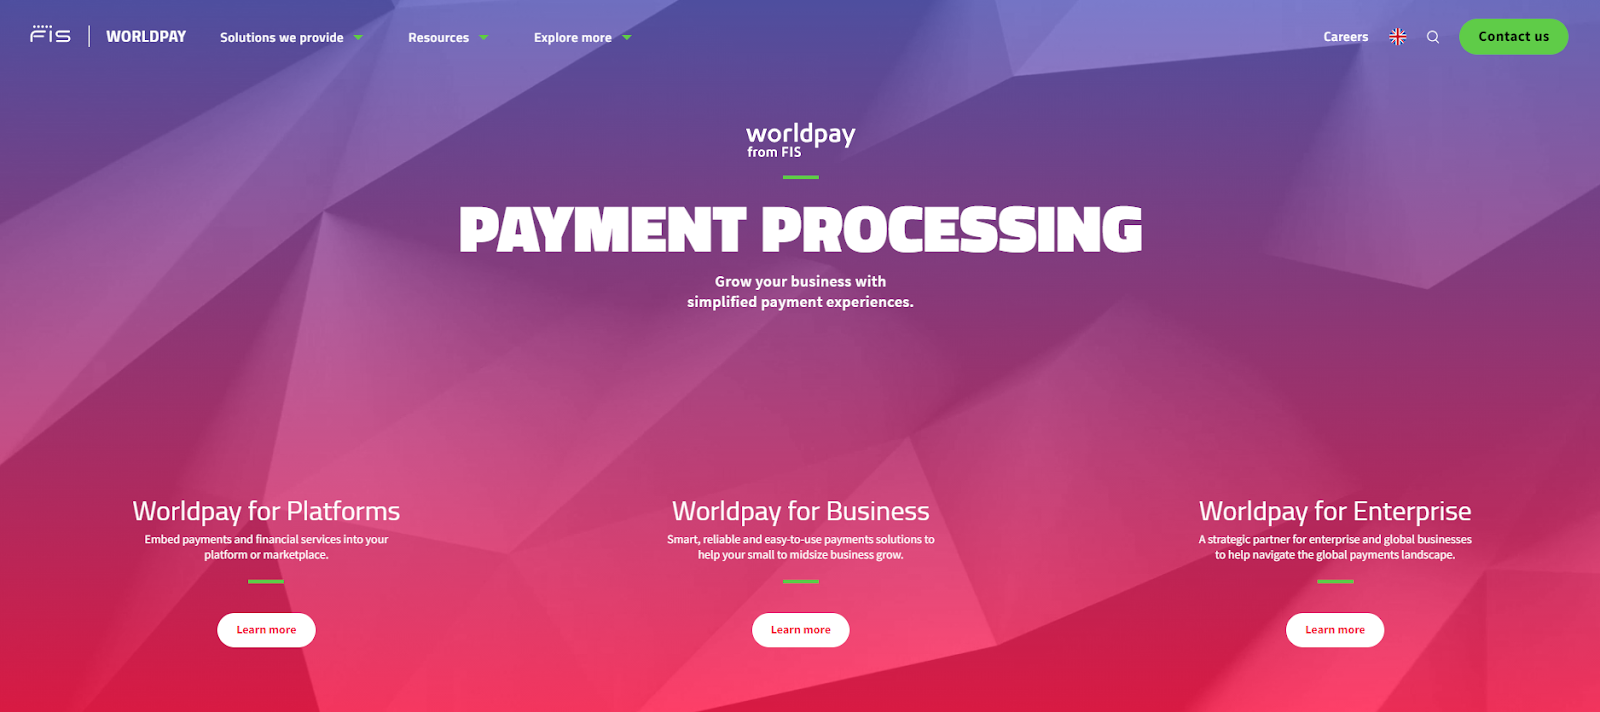 Wordlpay recurring payment processing platform